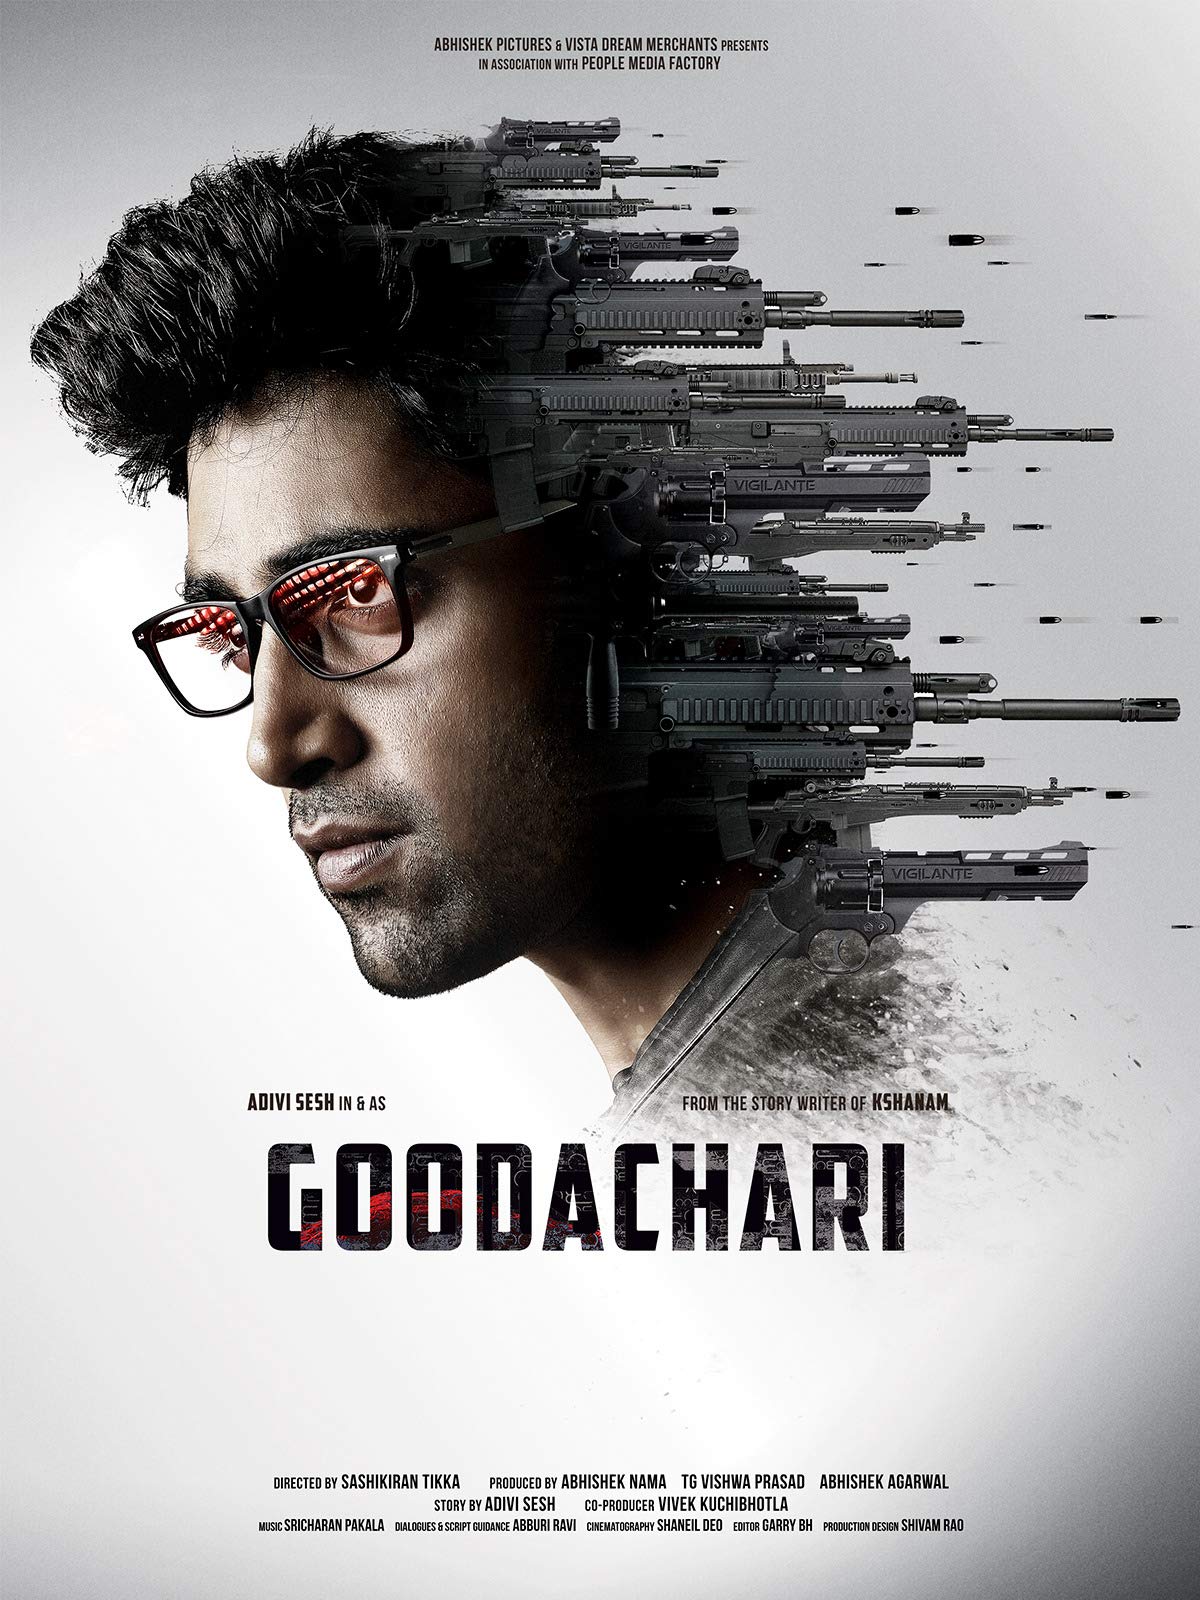 Goodachari hindi dubbed movie